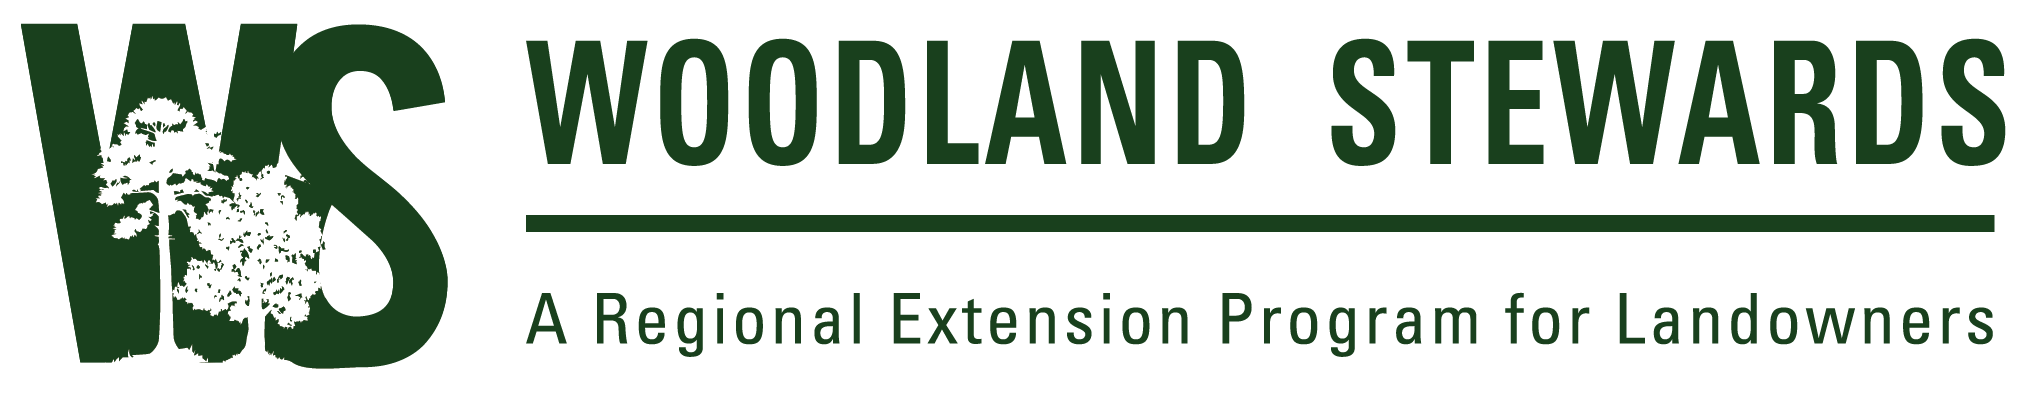 Woodland Stewards: A Regional Extension Program for Landowners